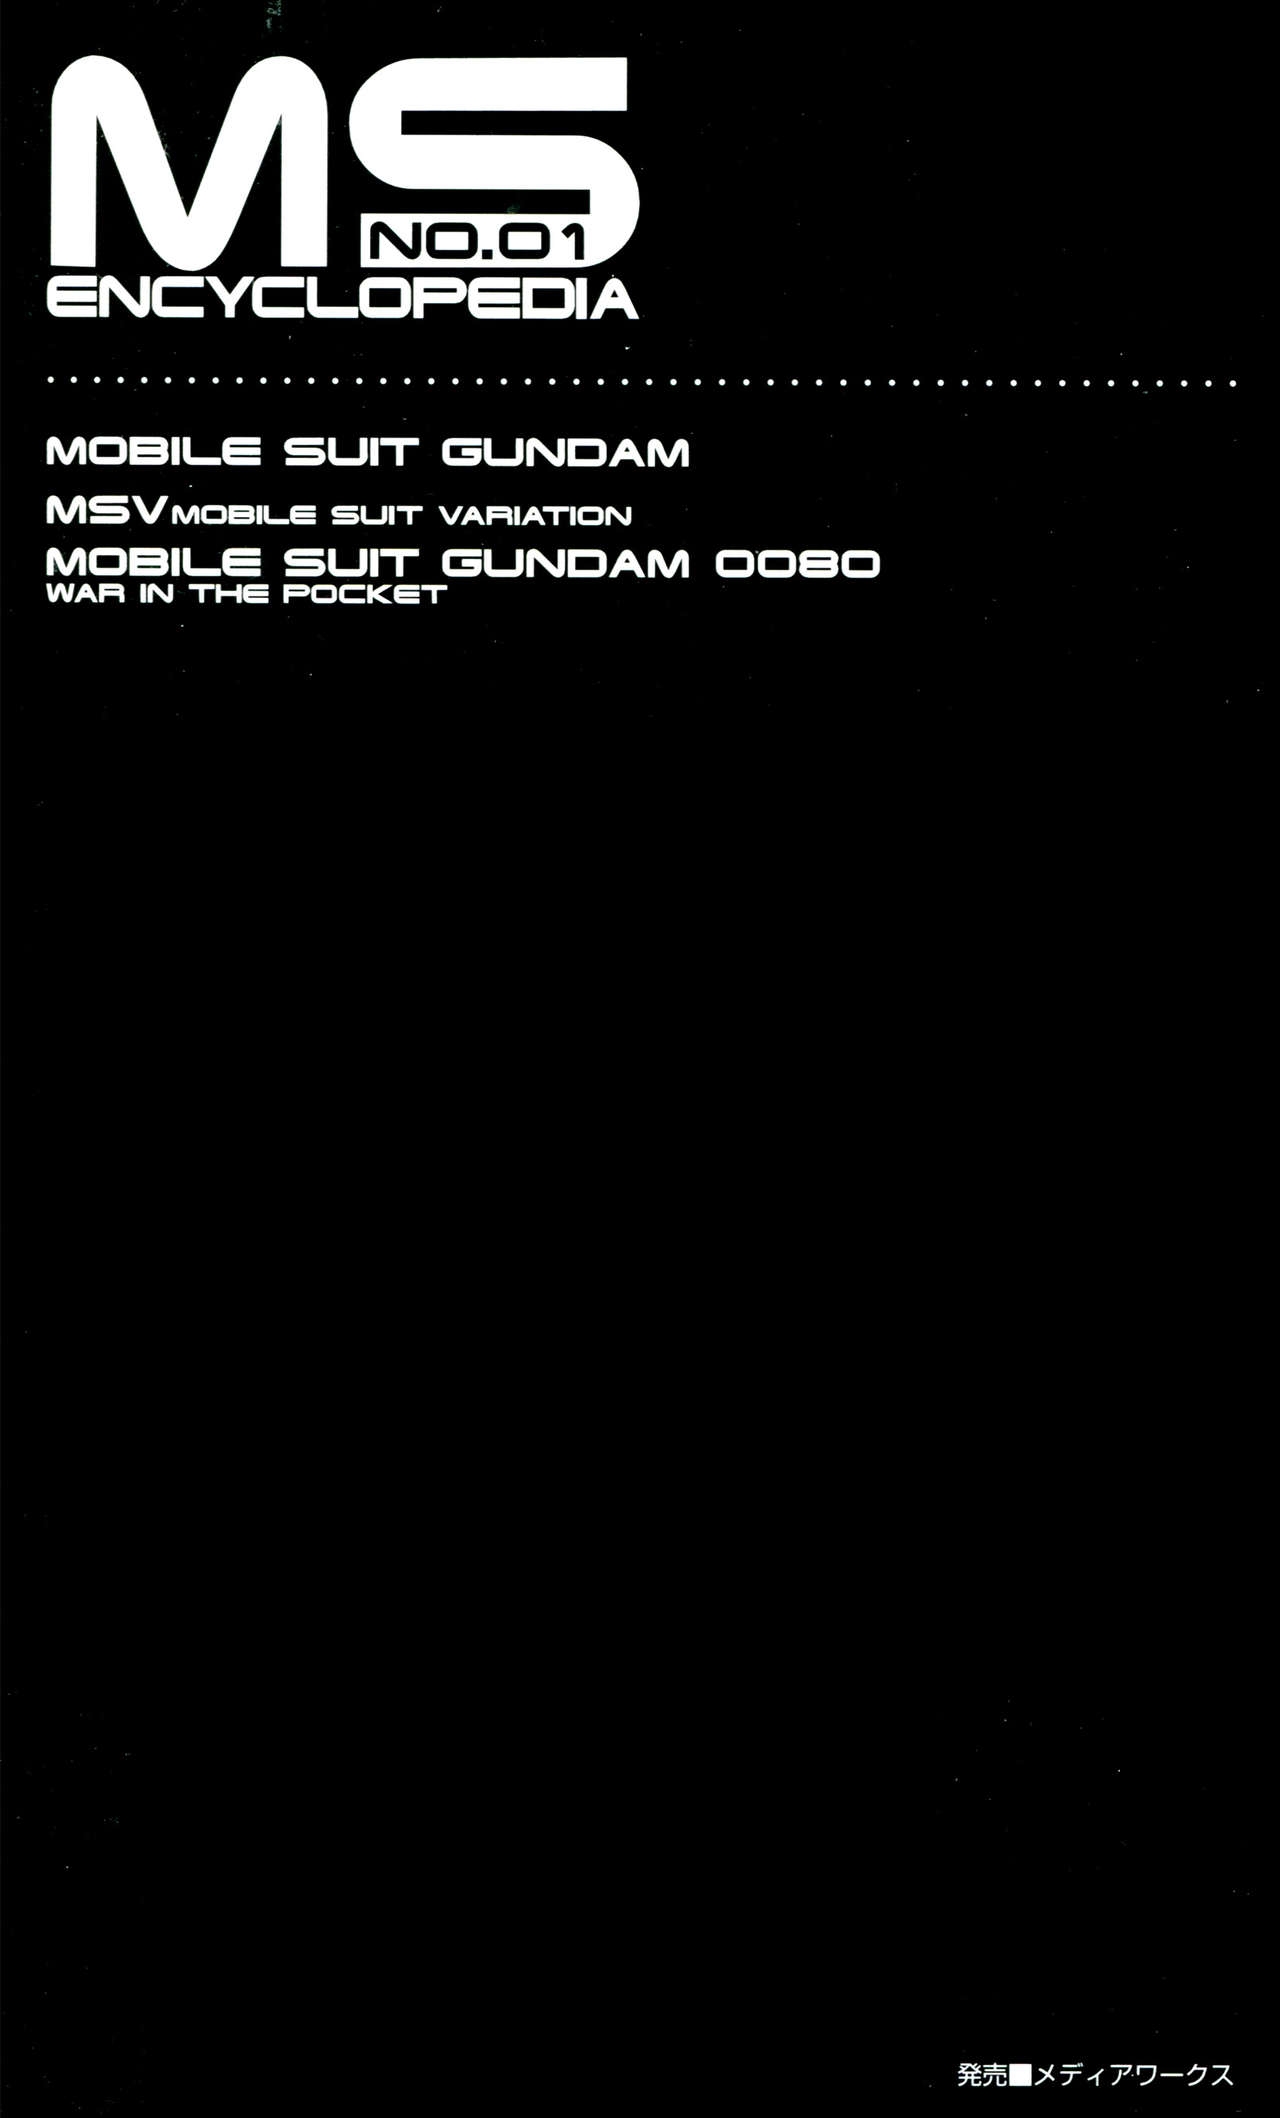 Mobile Suit Gundam U.C. Box MS Gundam Encyclopedia NO.01 - Mobile Suit Gundam 147